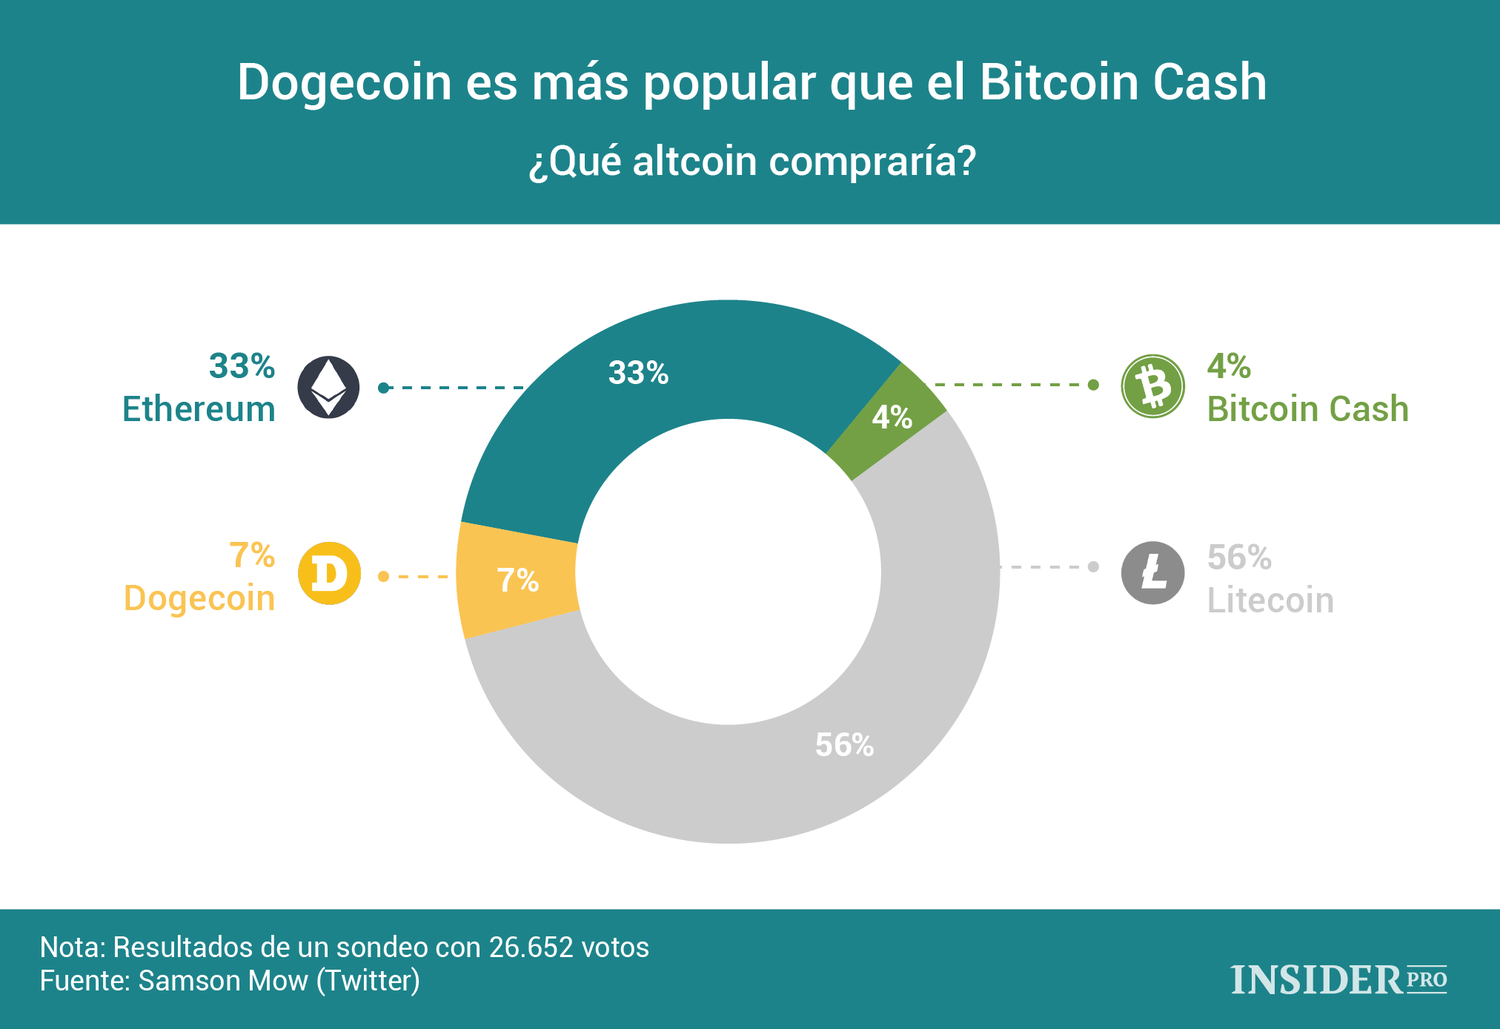 Grafico Del Dia Dogecoin Es Mas Popular Que El Bitcoin Cash - 